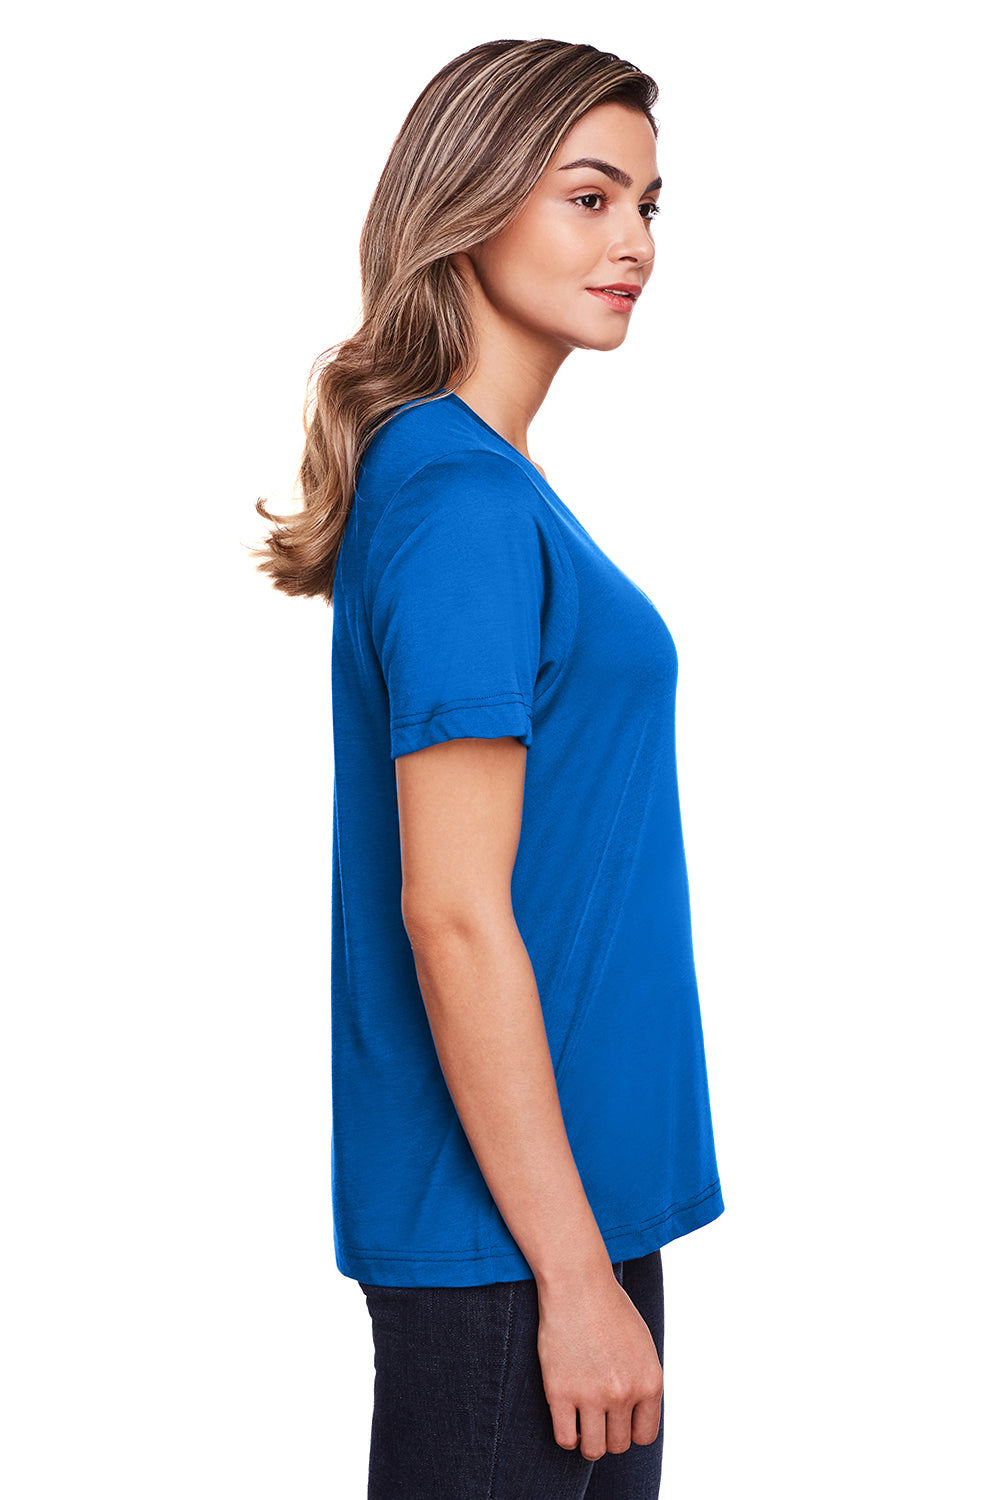 Core 365 CE111W Womens Fusion ChromaSoft Performance Moisture Wicking Short Sleeve Scoop Neck T-Shirt Royal Blue Side